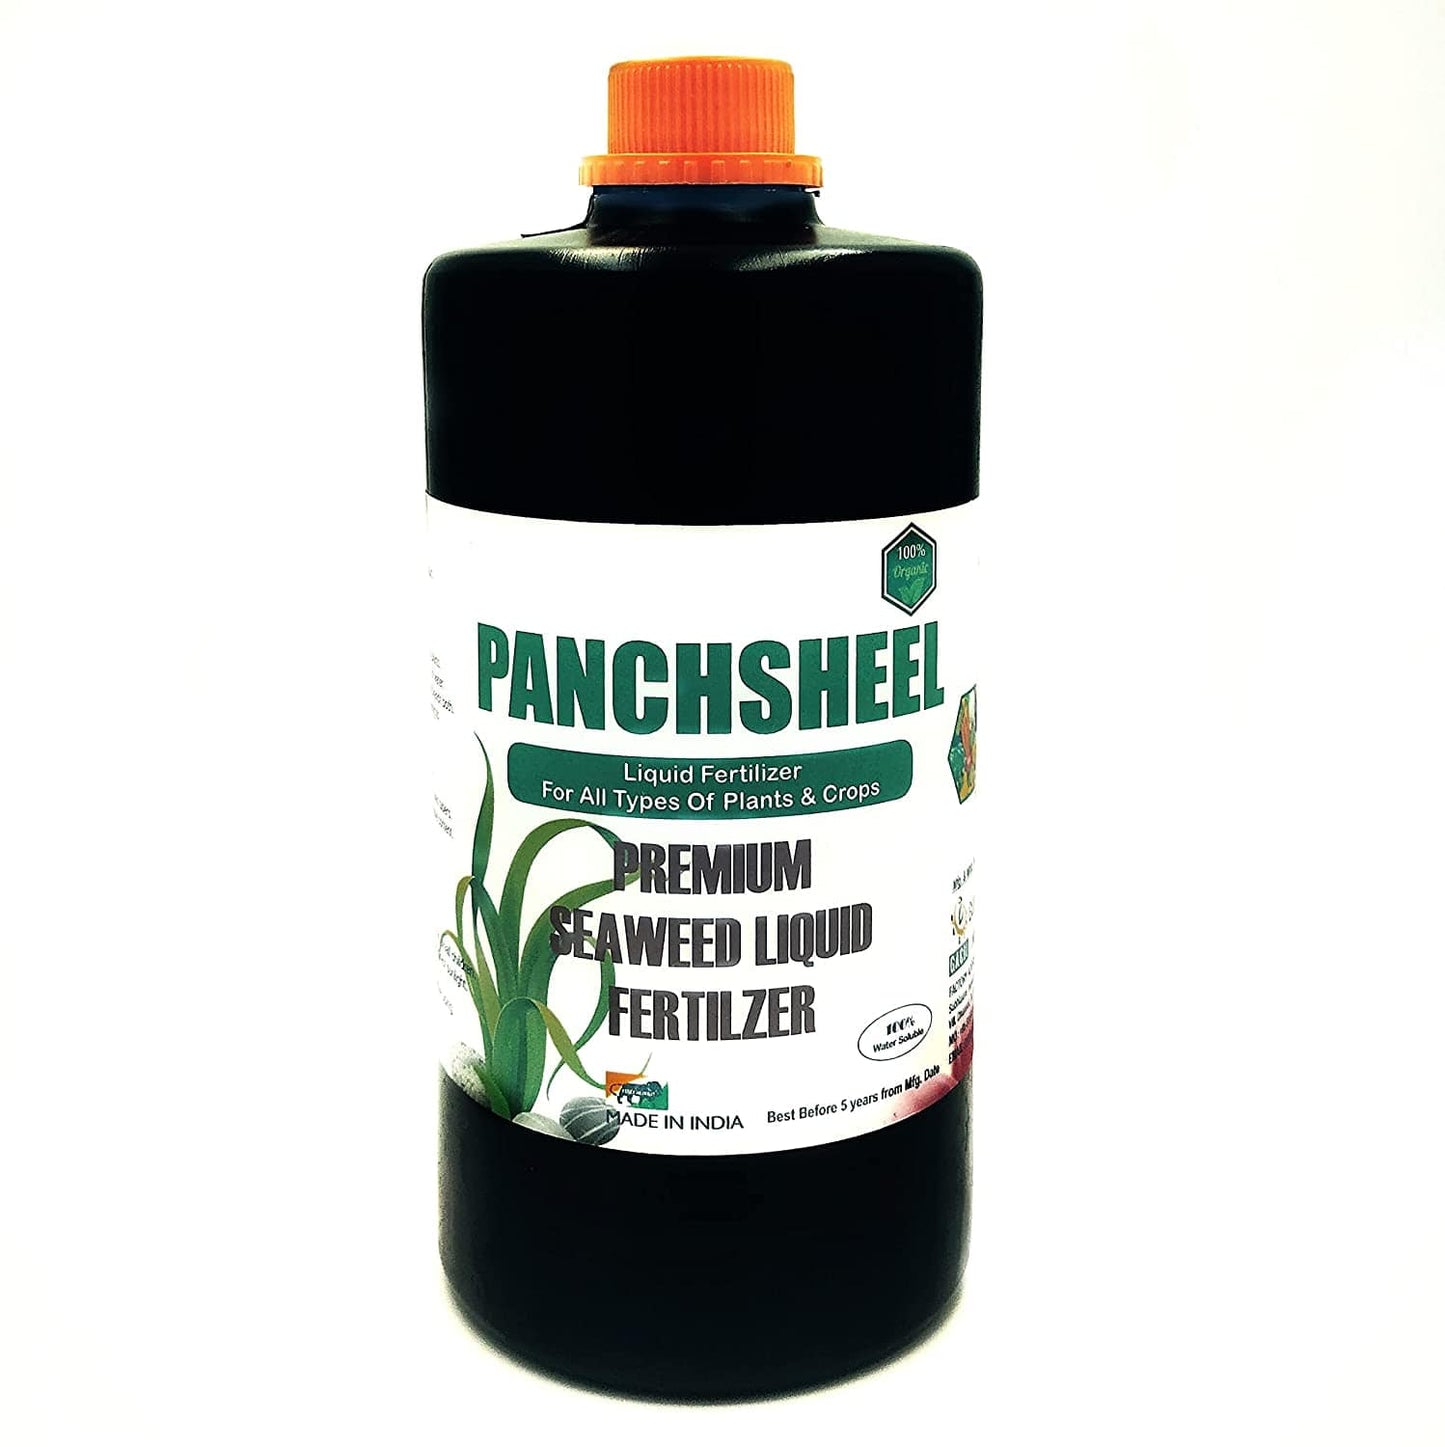 Panchsheel Premium Seaweed Liquid Fertilizer (Natural & Organic)